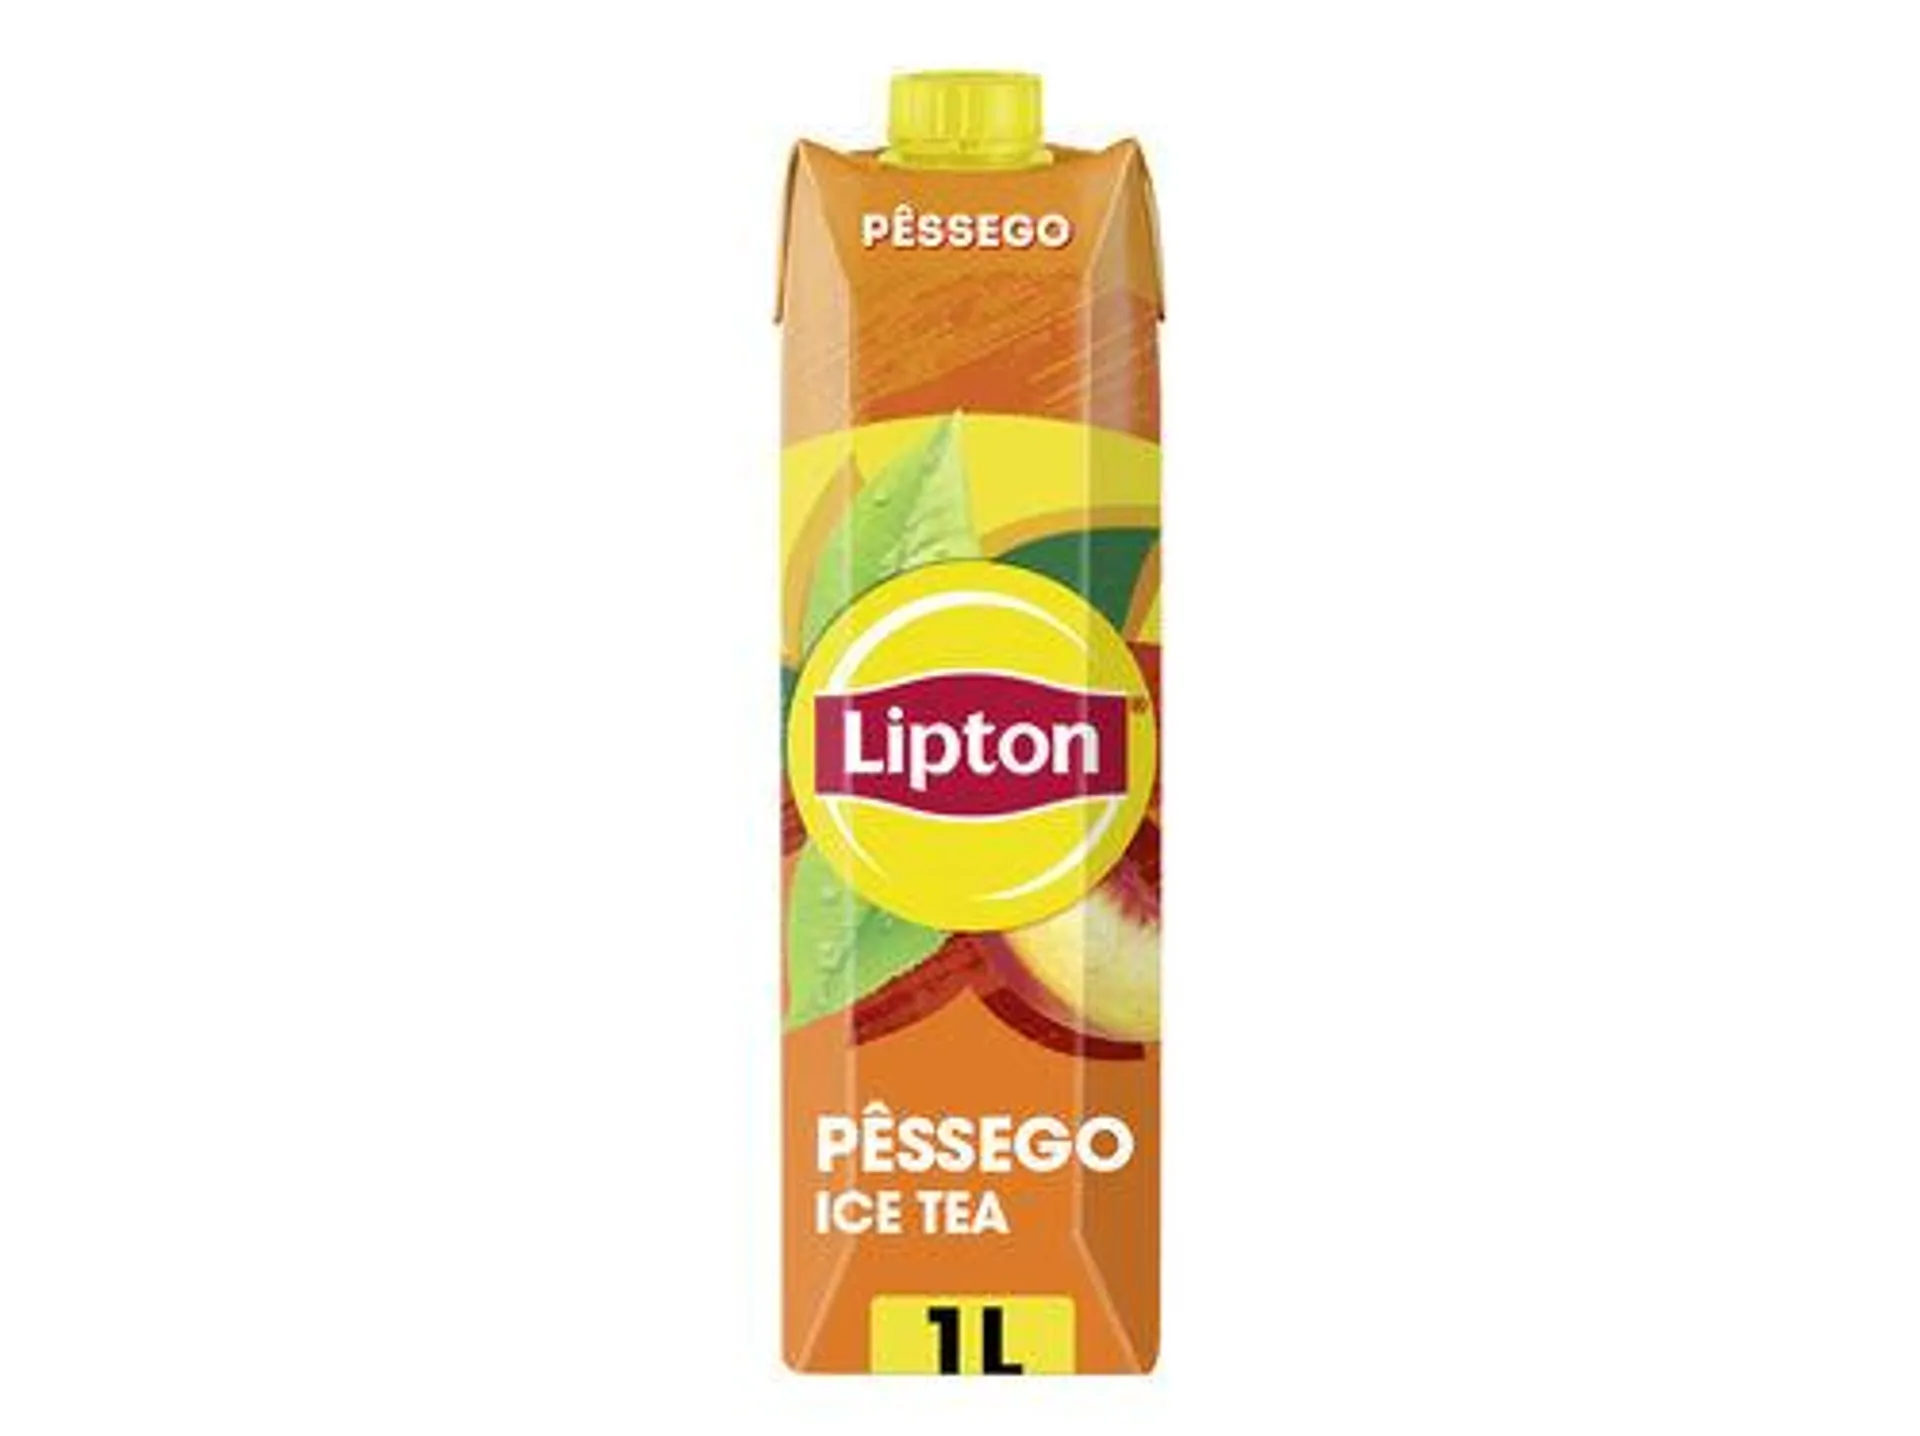 ice tea lipton pessego 1l